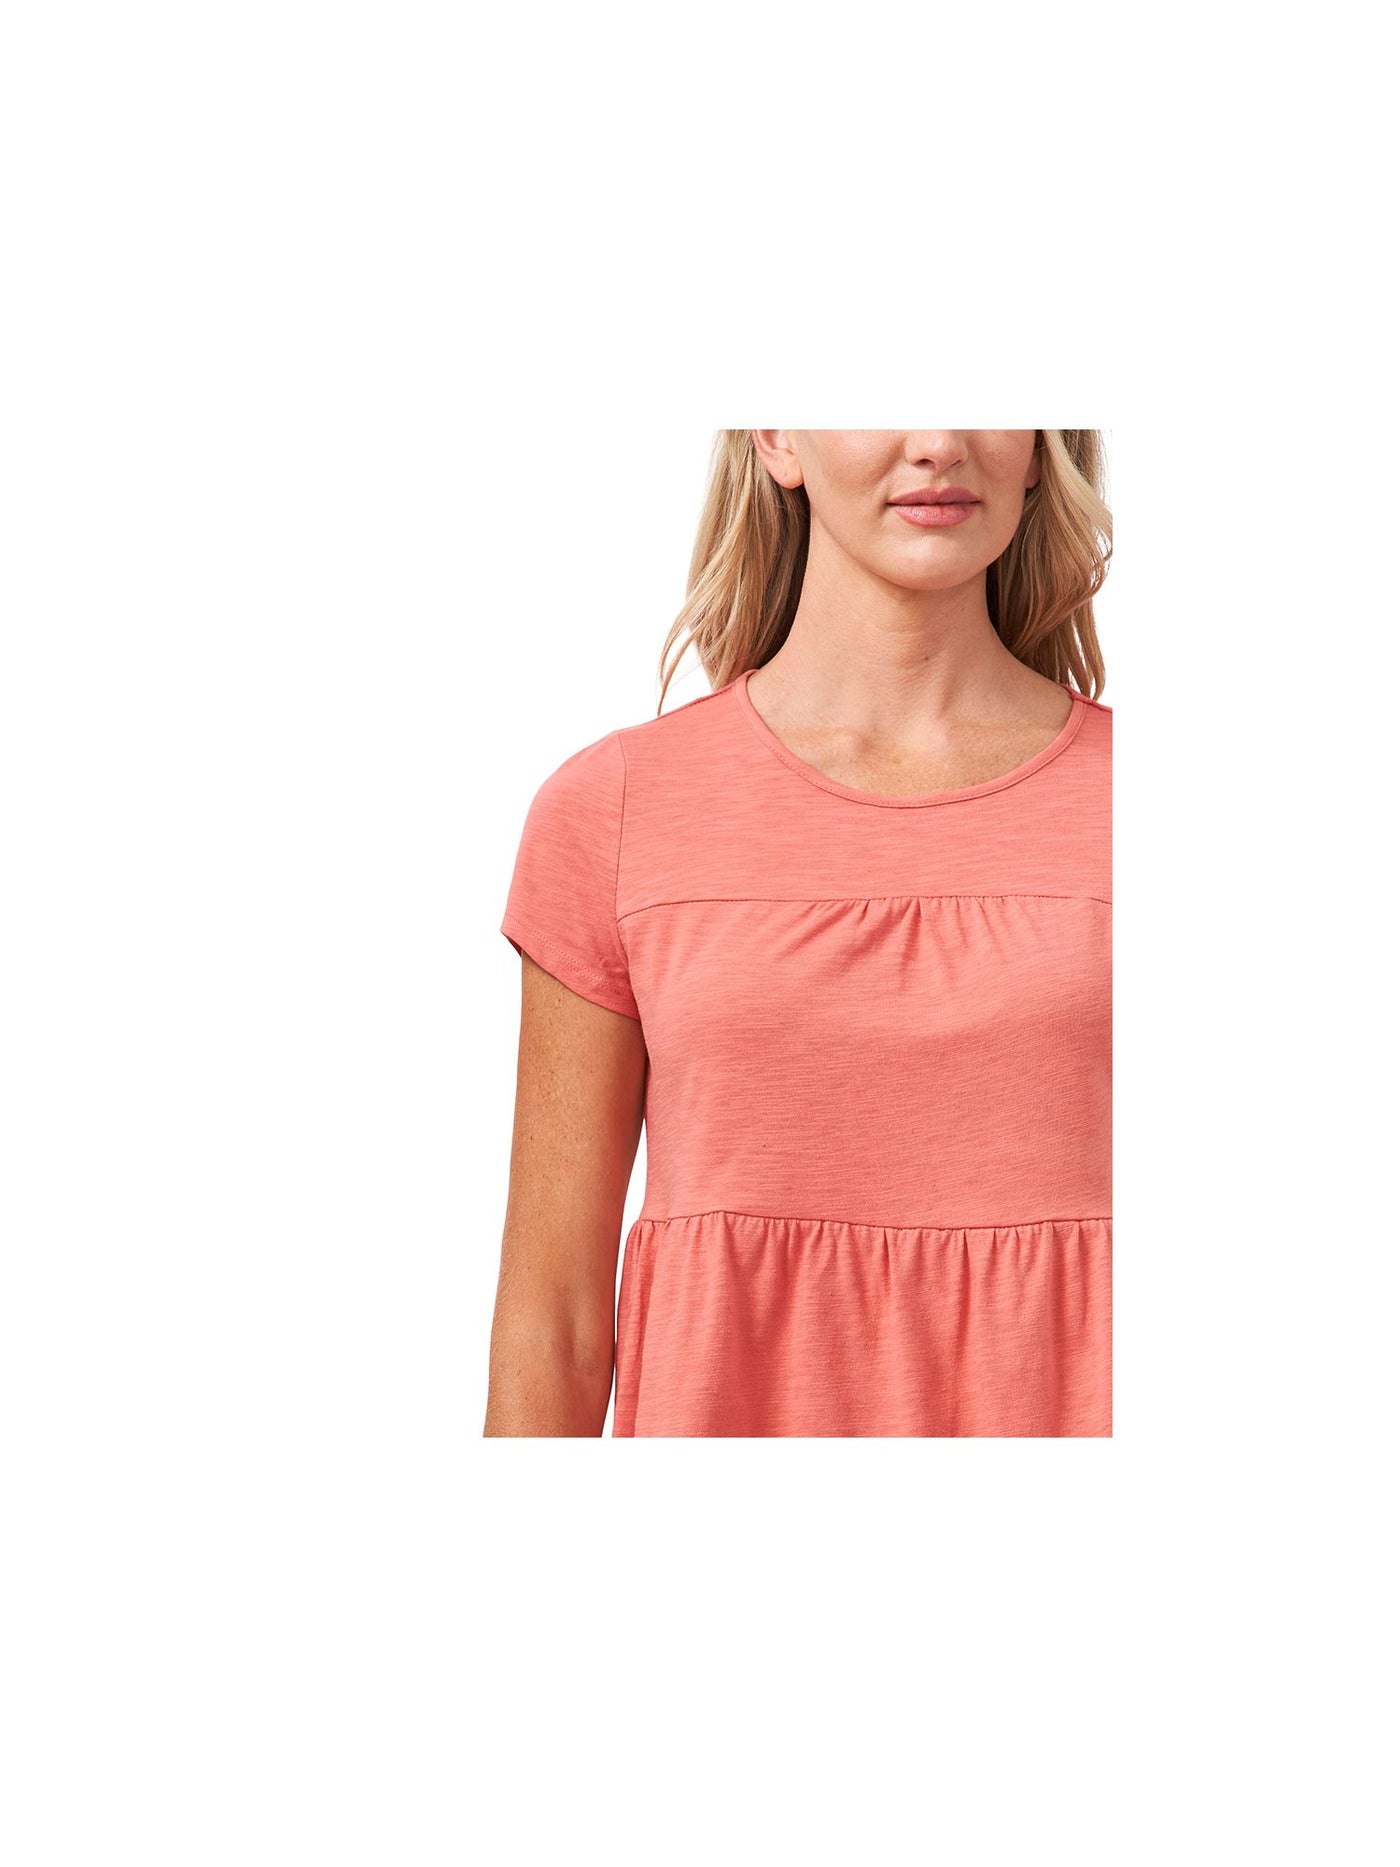 CECE Womens Coral Cotton Blend Short Sleeve Crew Neck T-Shirt S